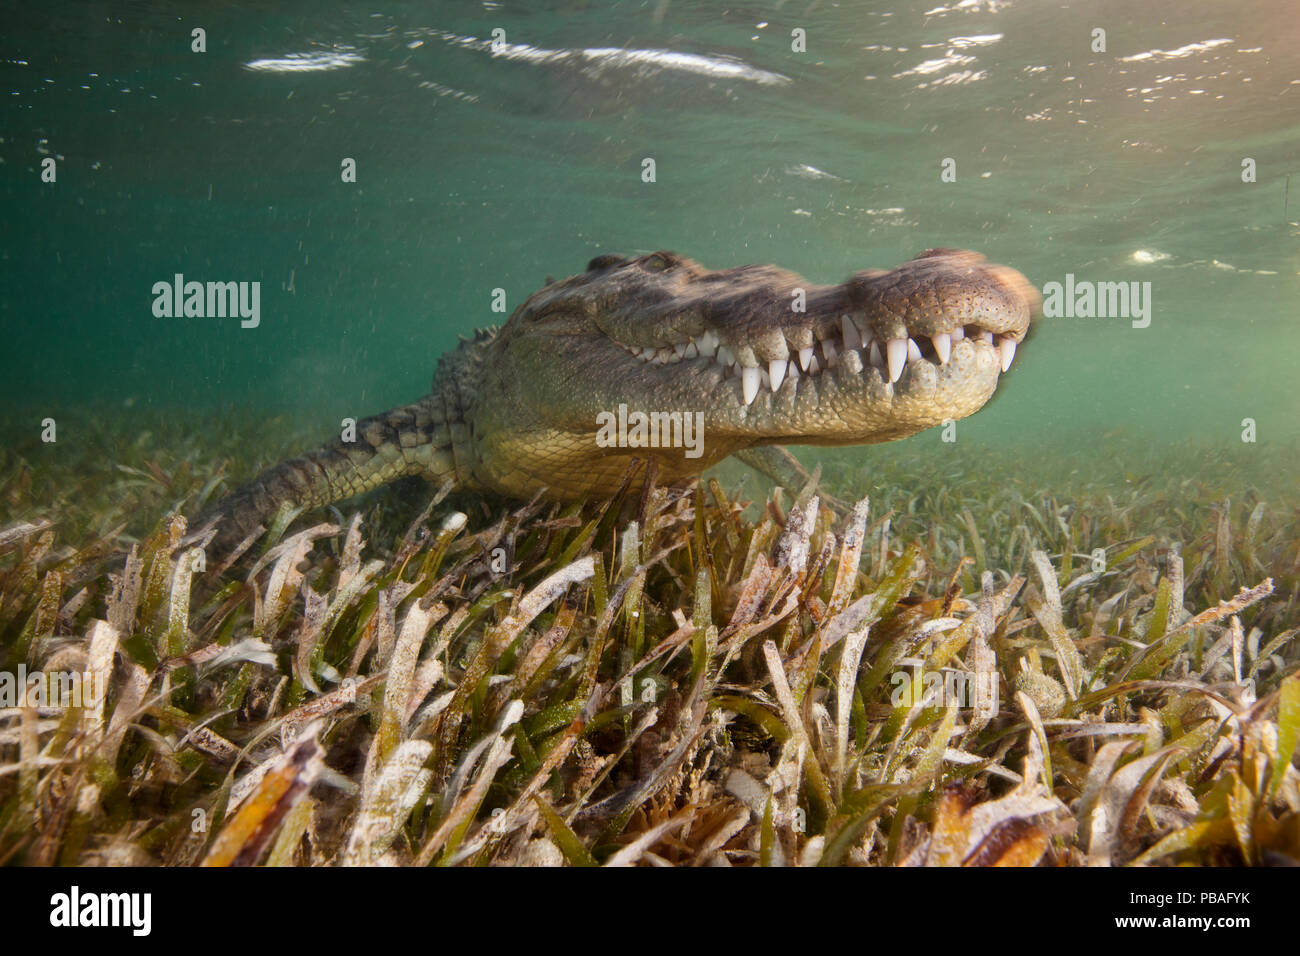 Spitzkrokodil (Crocodylus acutus) Porträt über Seegras Bett in flachen Ater, Banco Chinchorro Biosphärenreservat, Karibik, Mexiko, Mai. Stockfoto